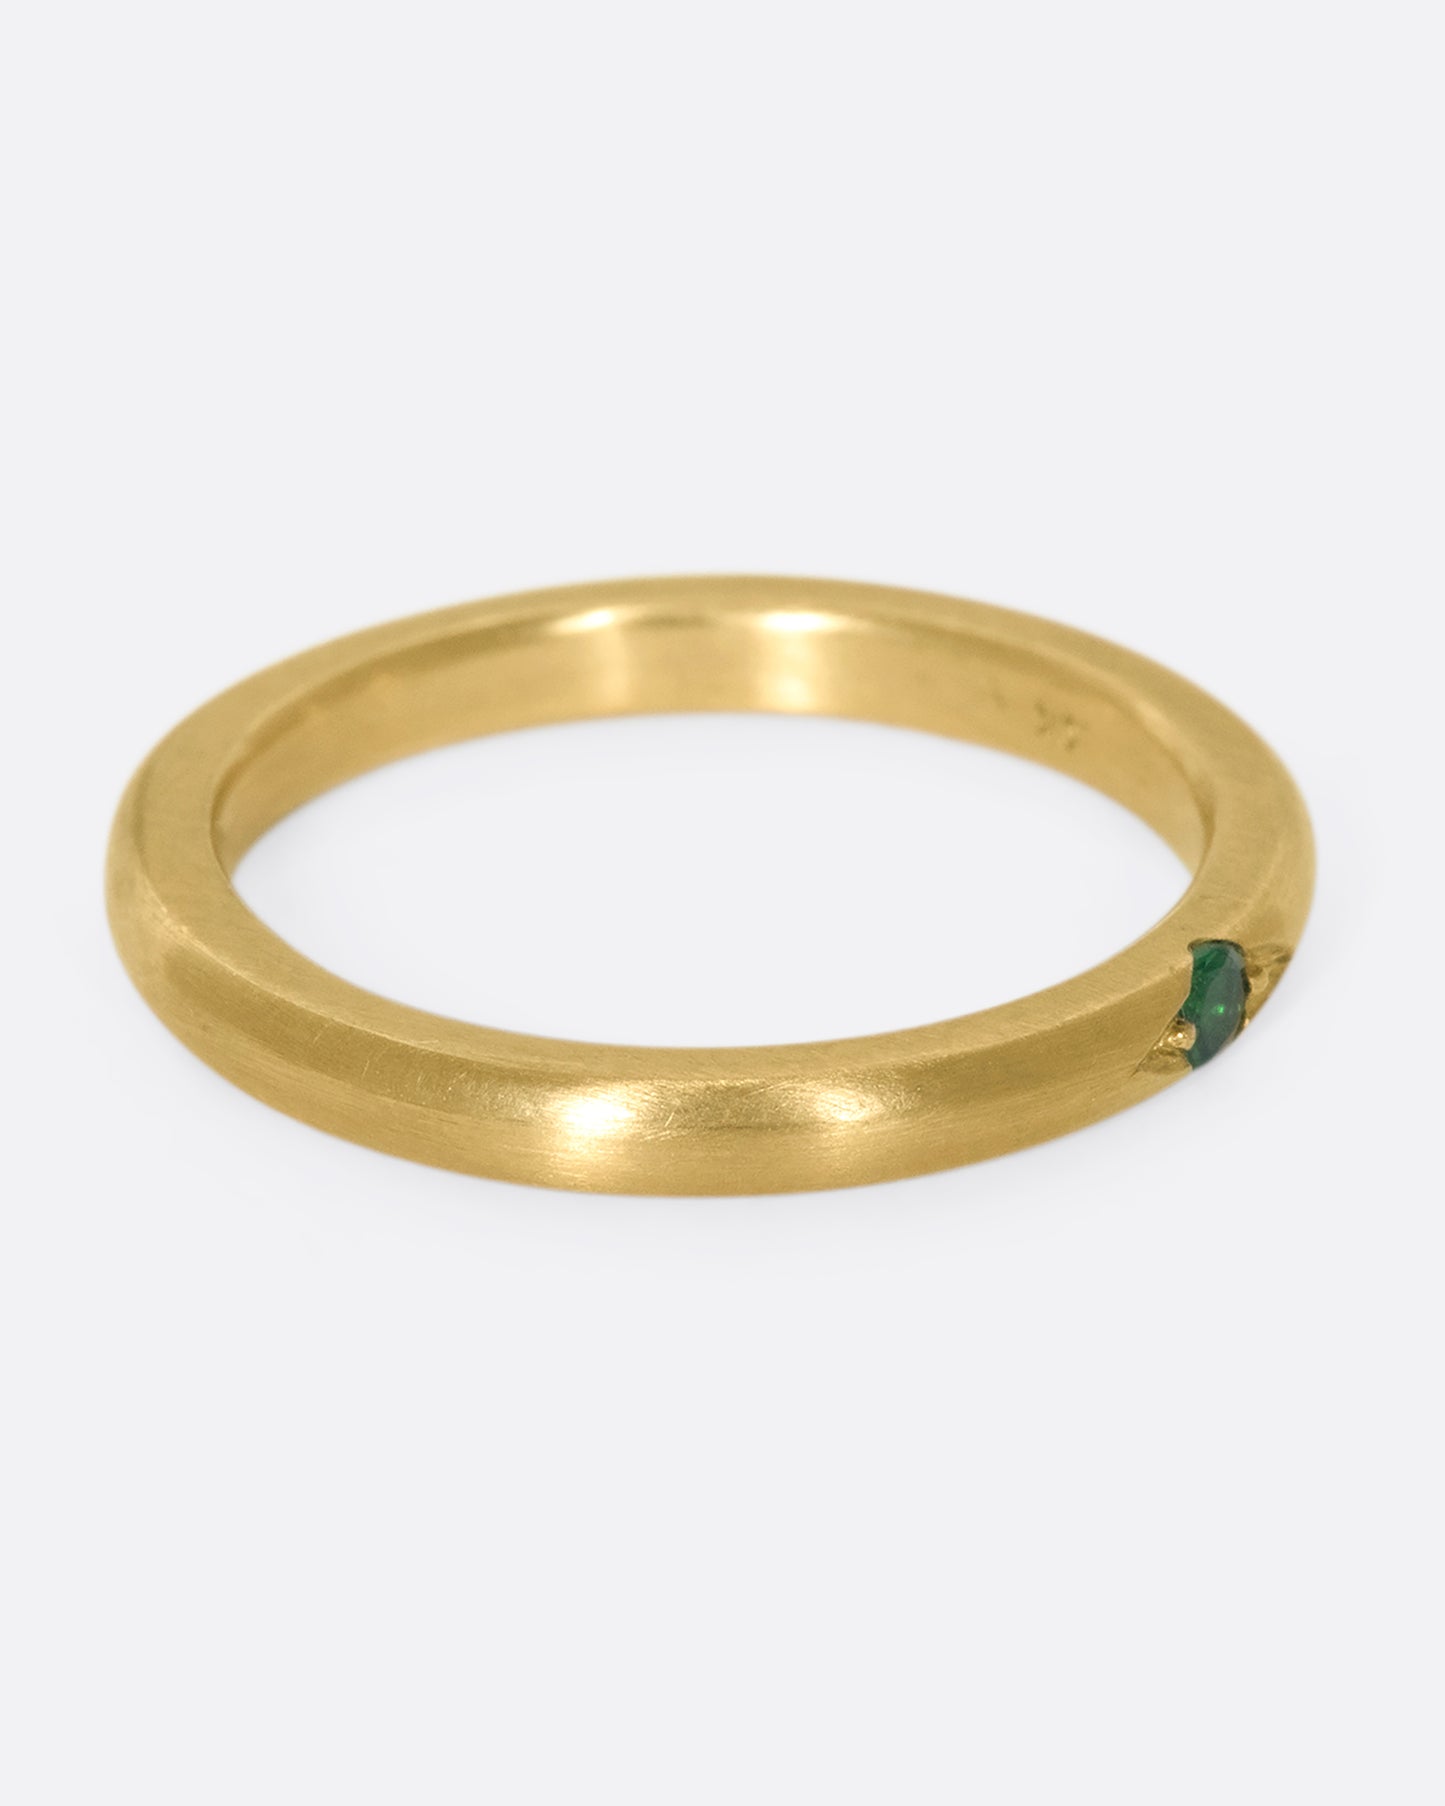 A 10k gold band with a single beautiful flush-set tsavorite garnet